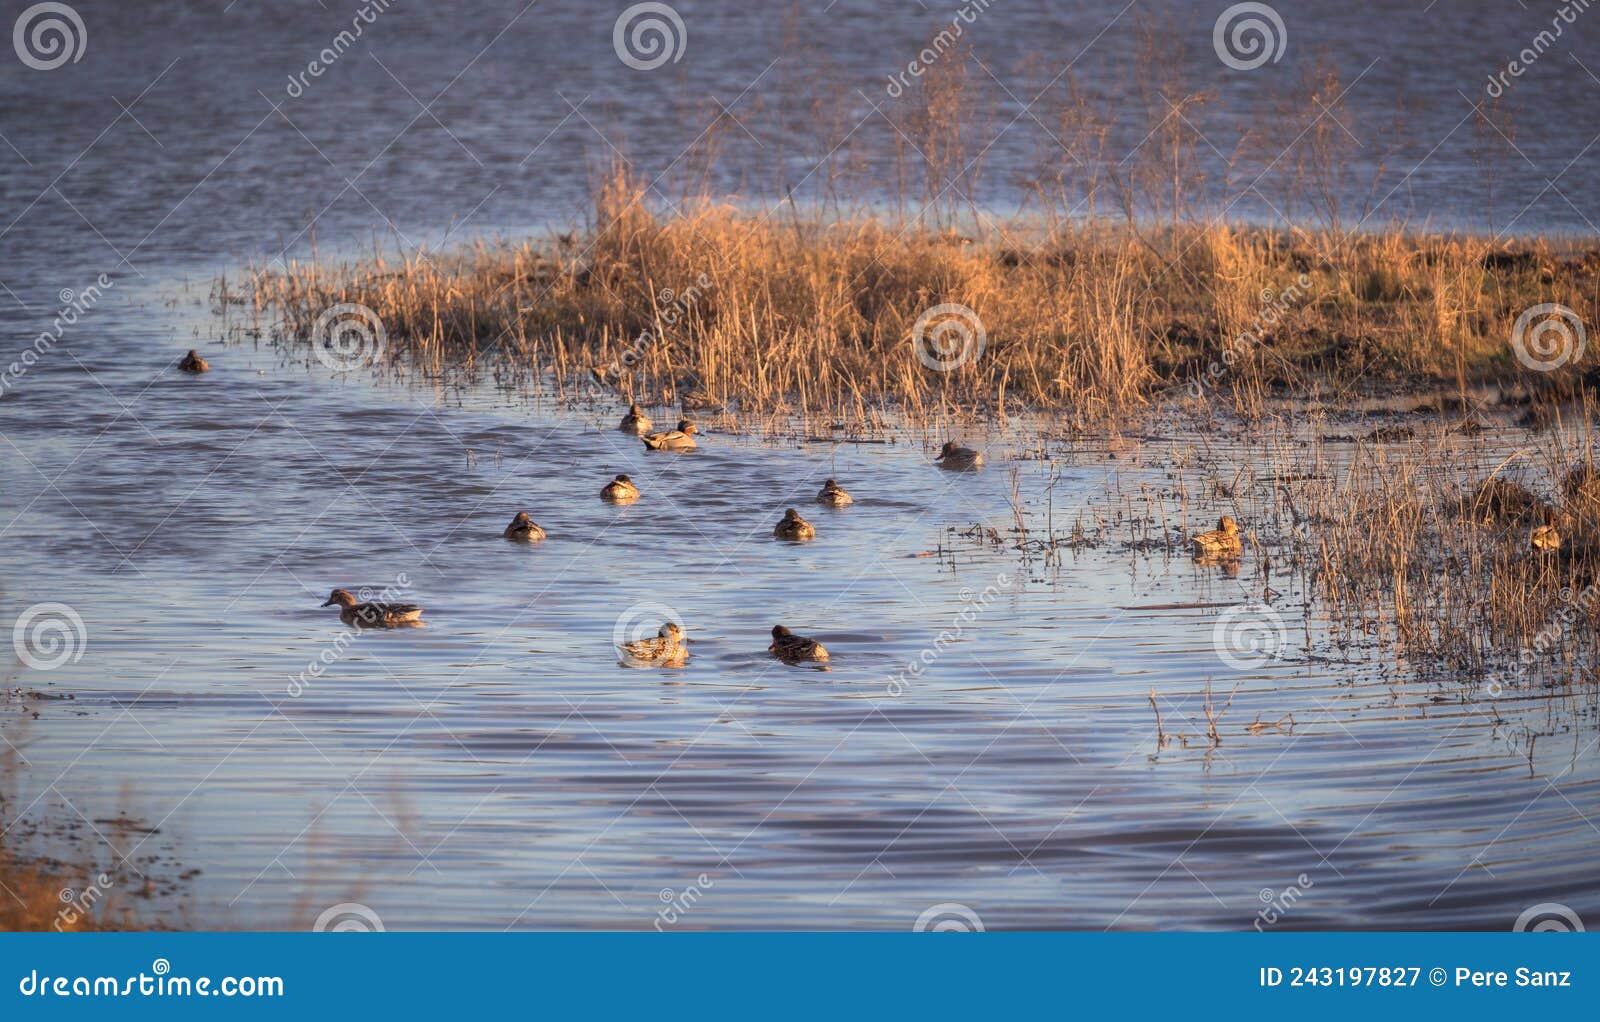 ducks spotted at aiguamolls d`emporda